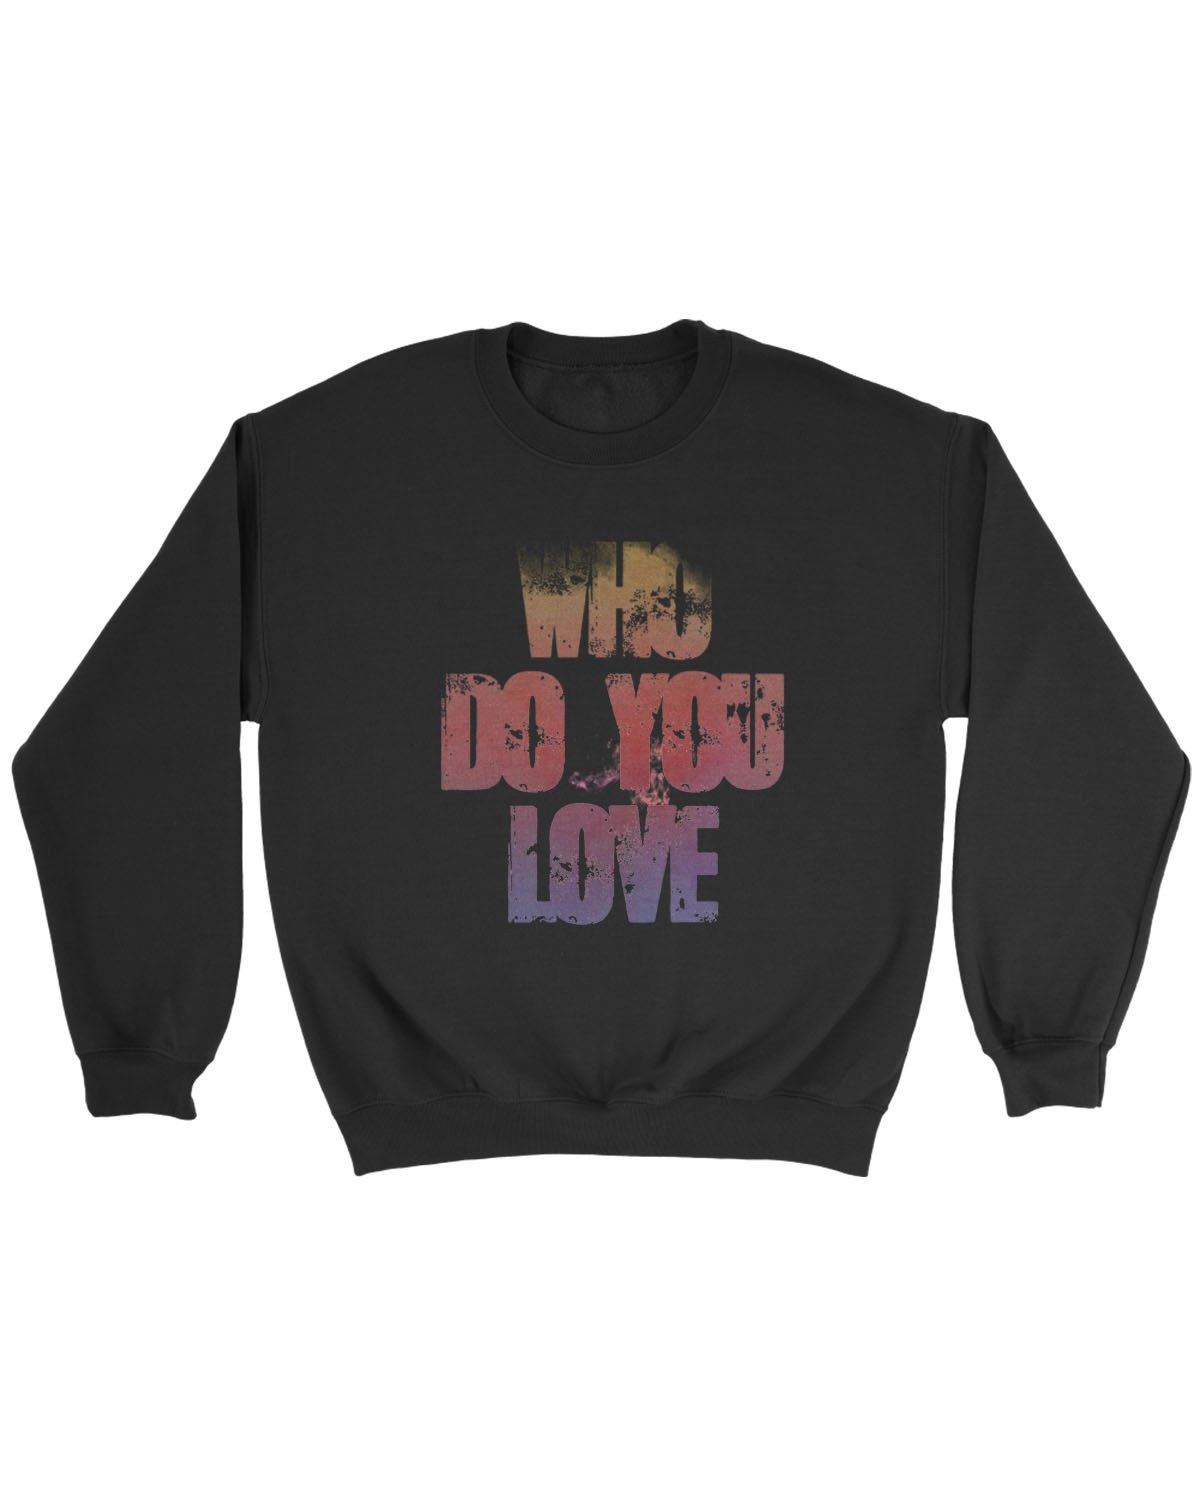 Who Do You Love Sweatshirt